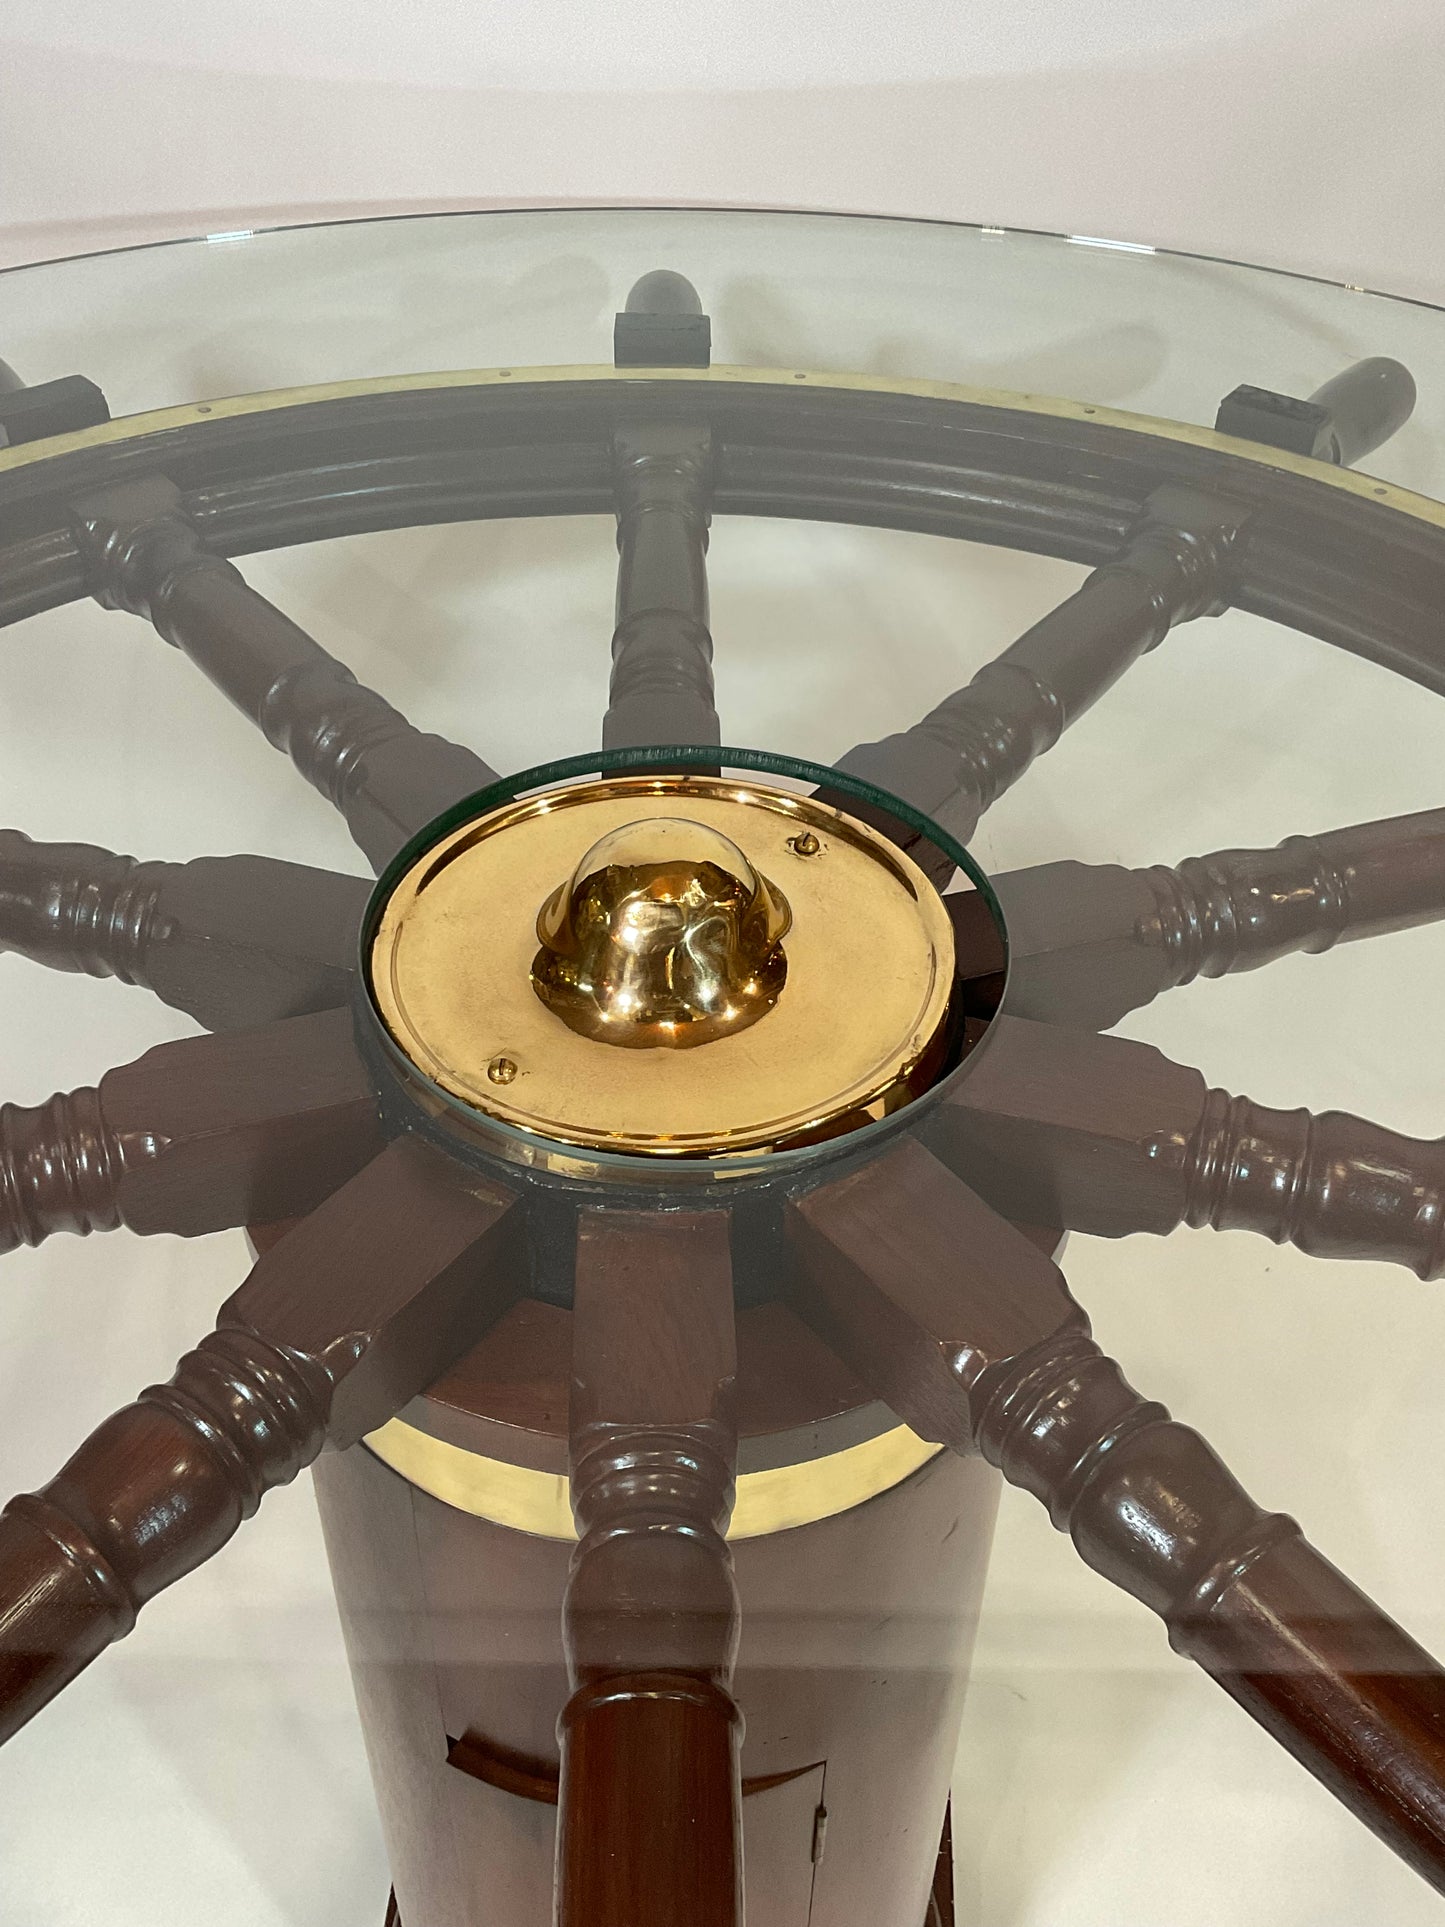 Ten Spoke Antique Ships Wheel Dining Table - Lannan Gallery